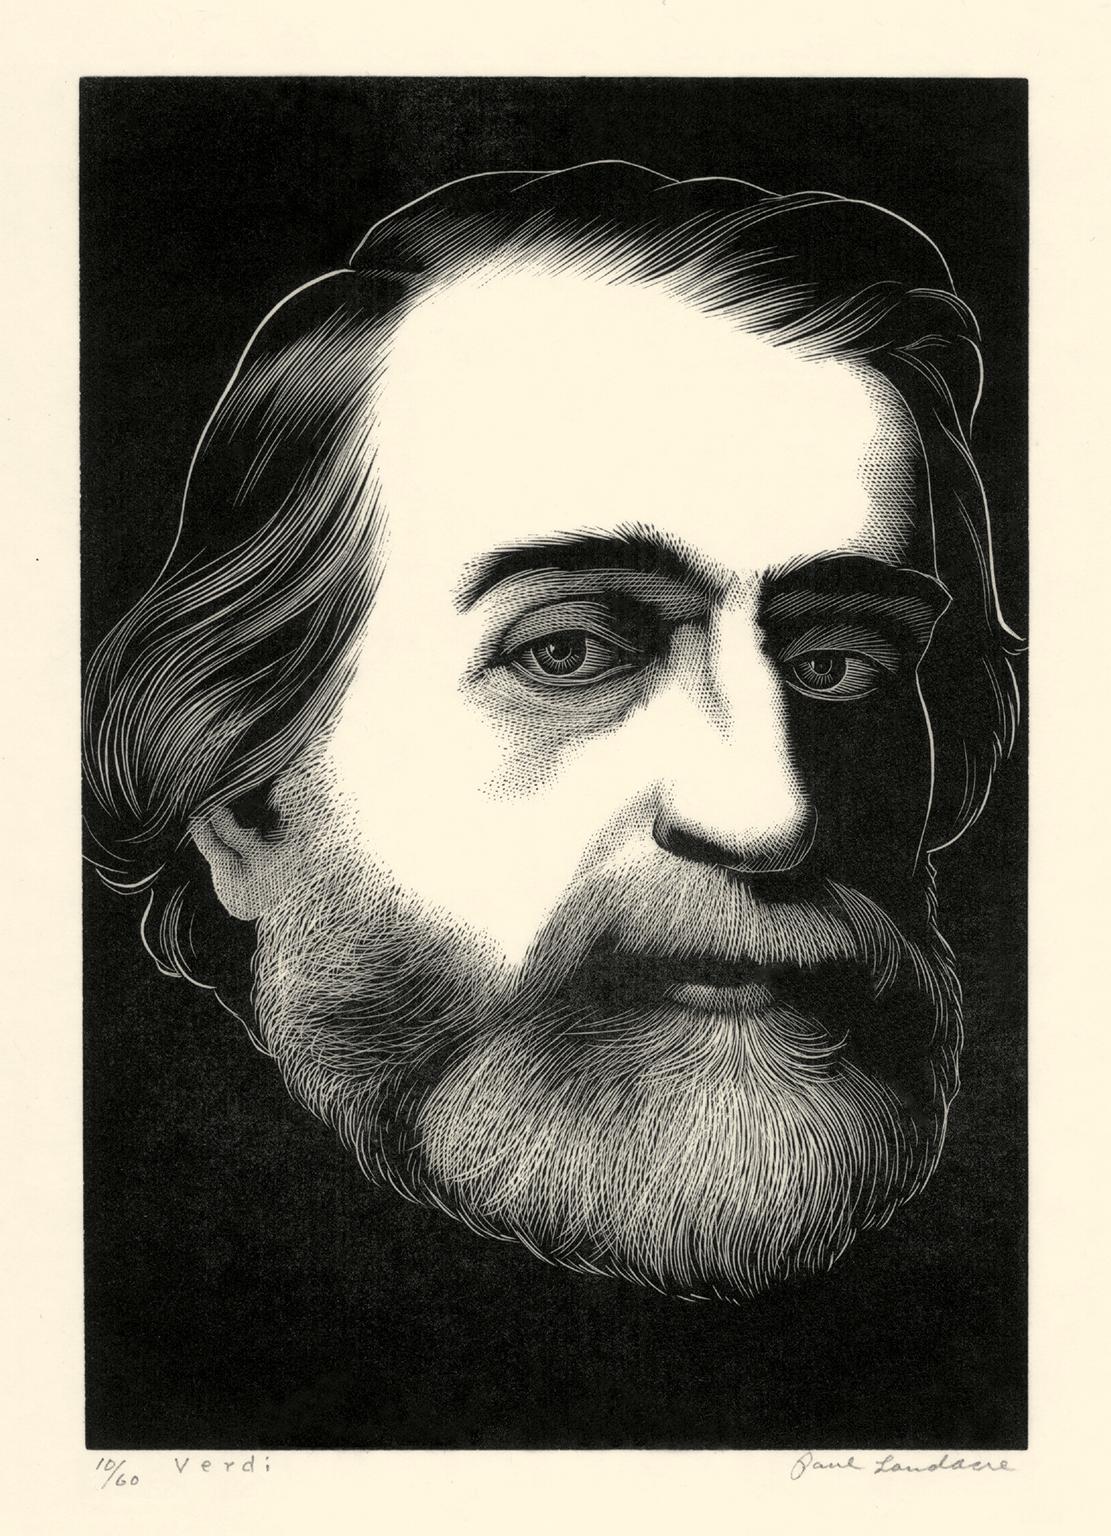 Paul Landacre Portrait Print - 'Verdi' — 1930s American Modernism - Italian Opera Composer